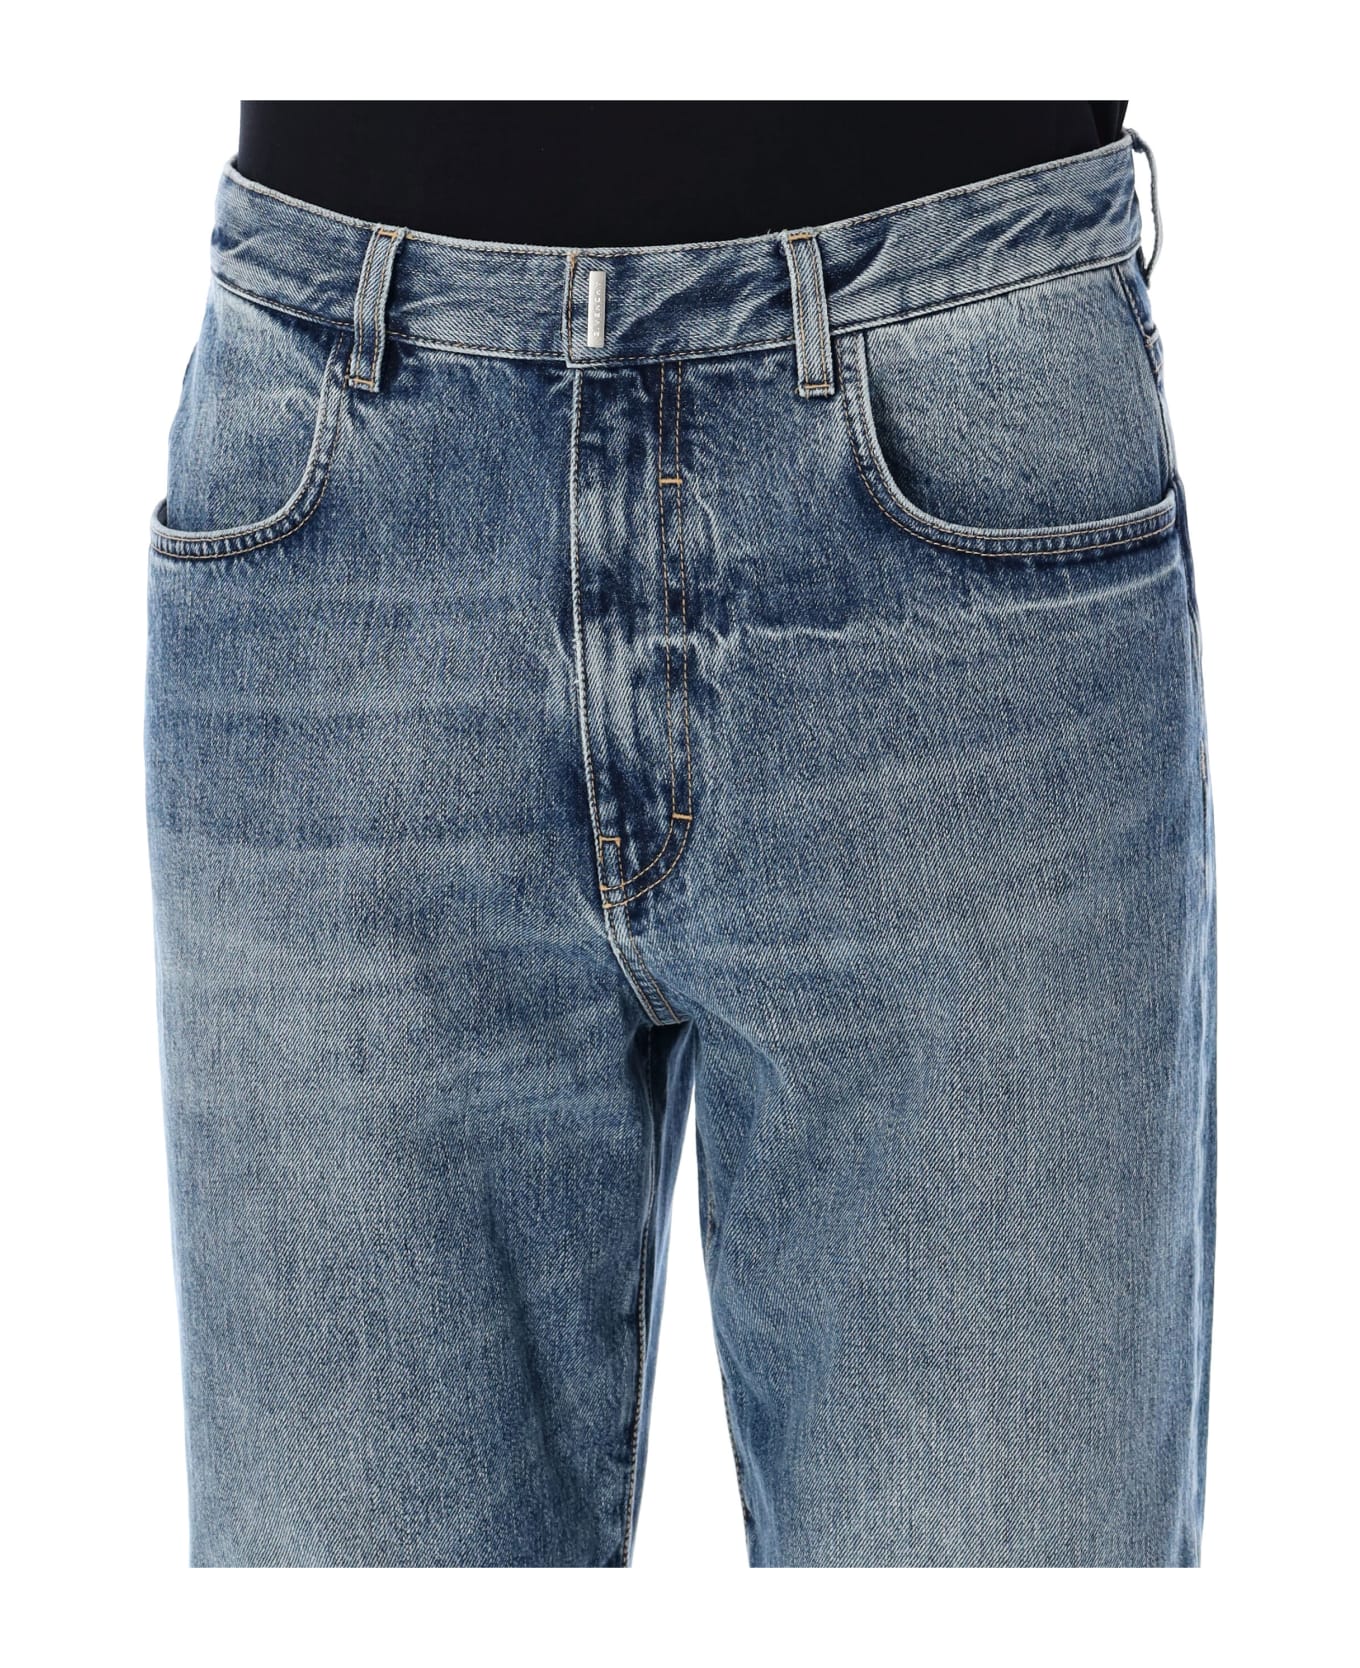 Givenchy Round Regular Fit 5 Pockets Denim - INDIGO BLUE